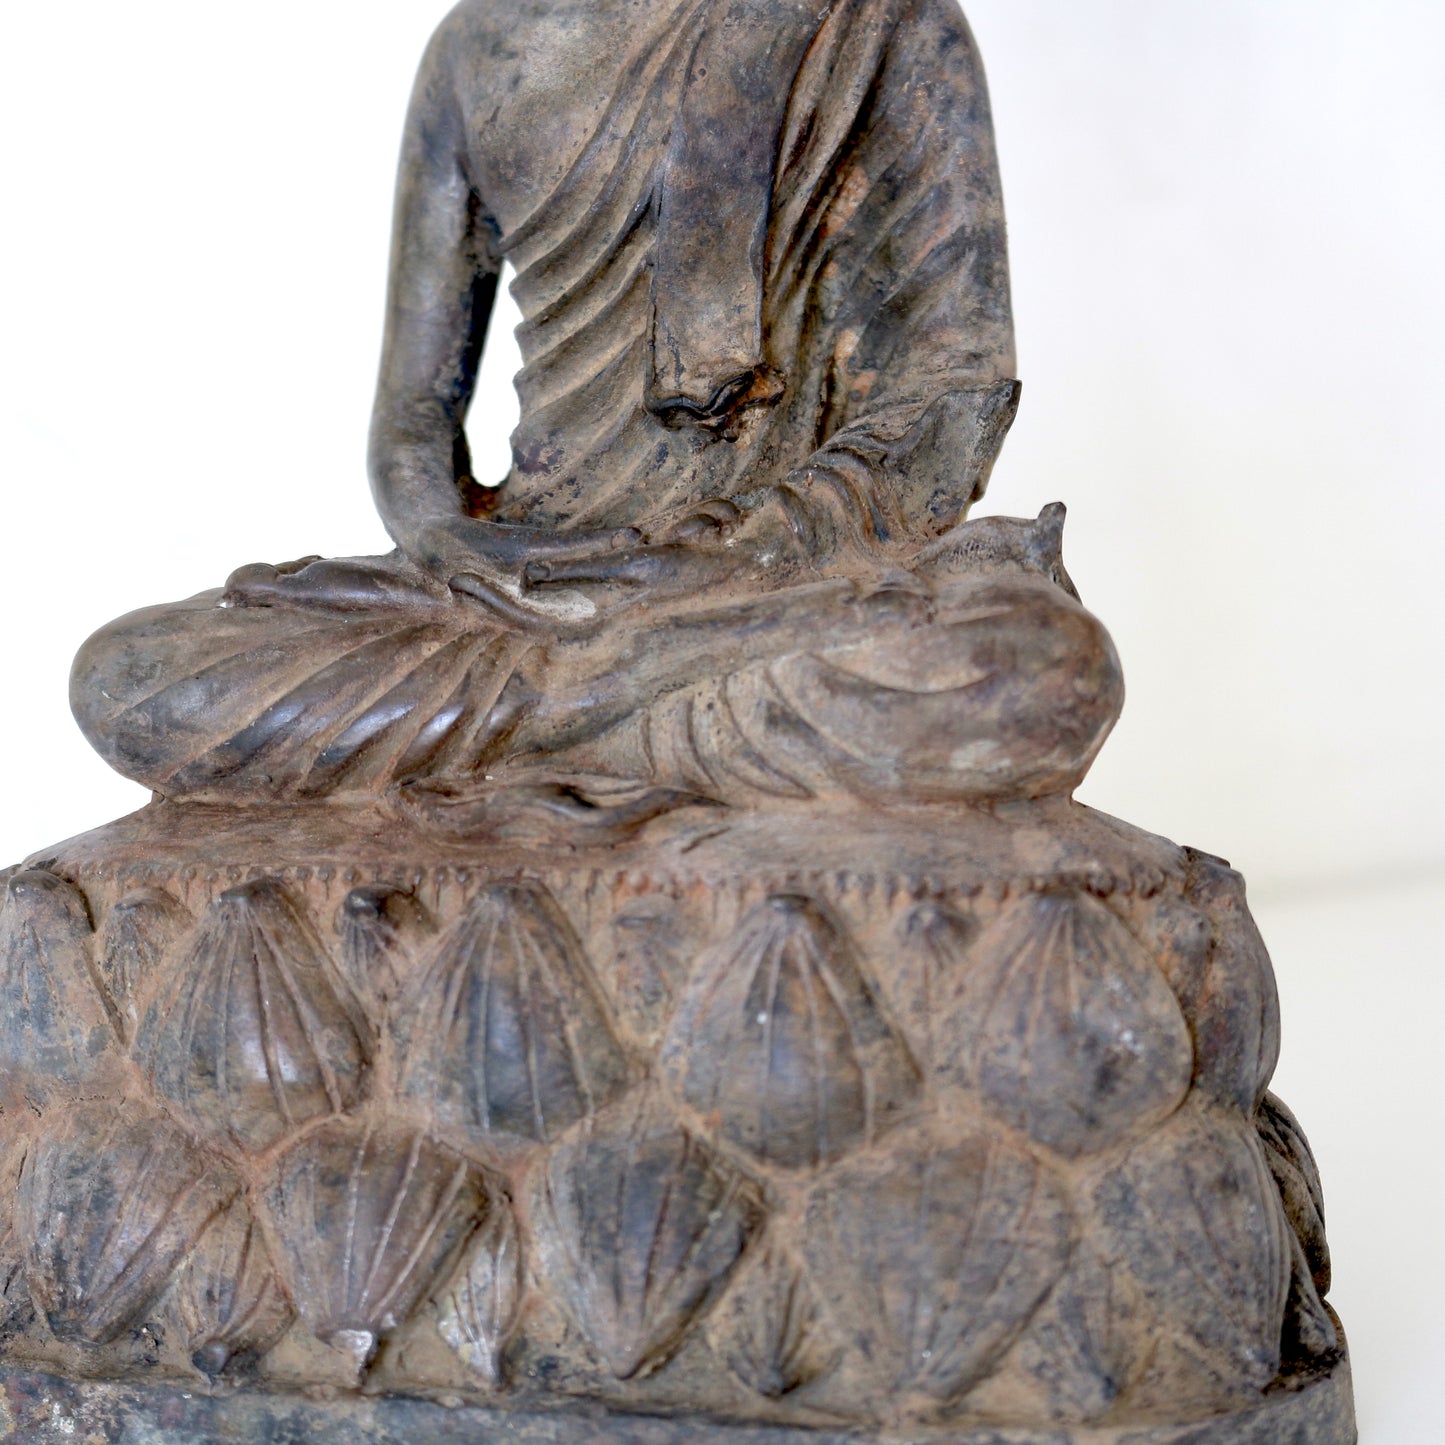 Seated Buddha Statue